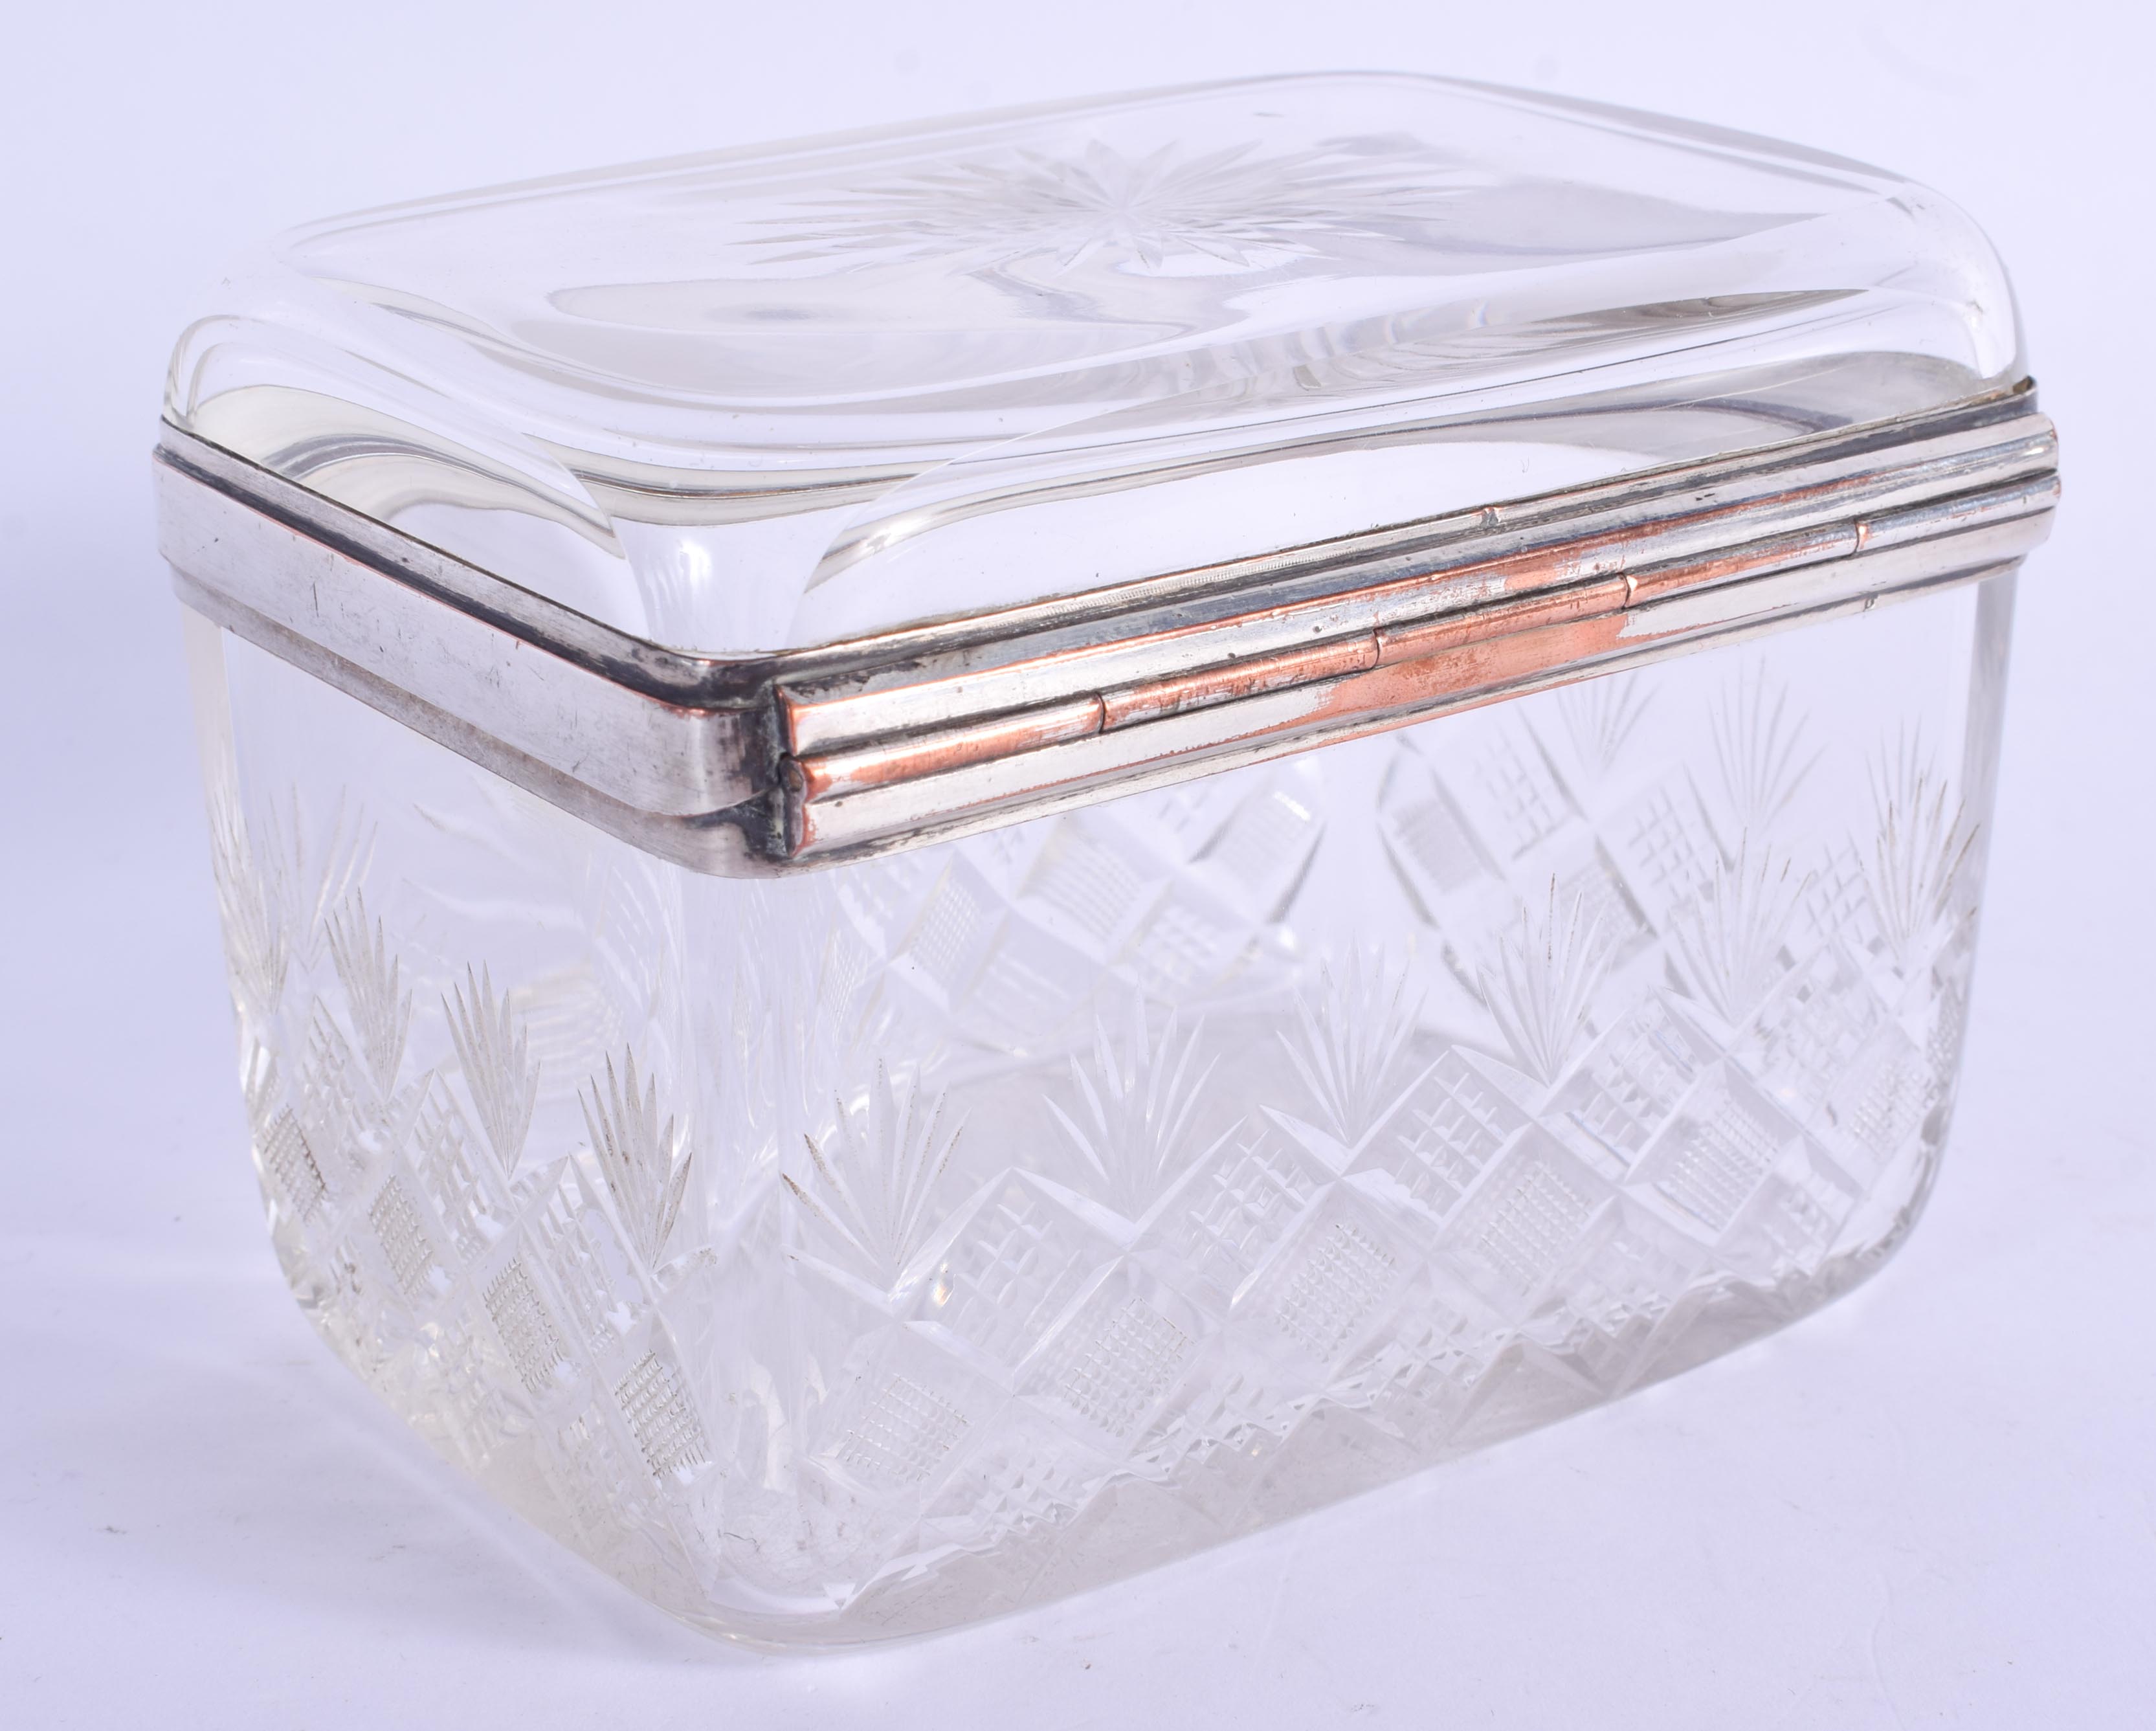 AN ANTIQUE CRYSTAL GLASS CASKET. 12 cm x 9 cm. - Image 2 of 3